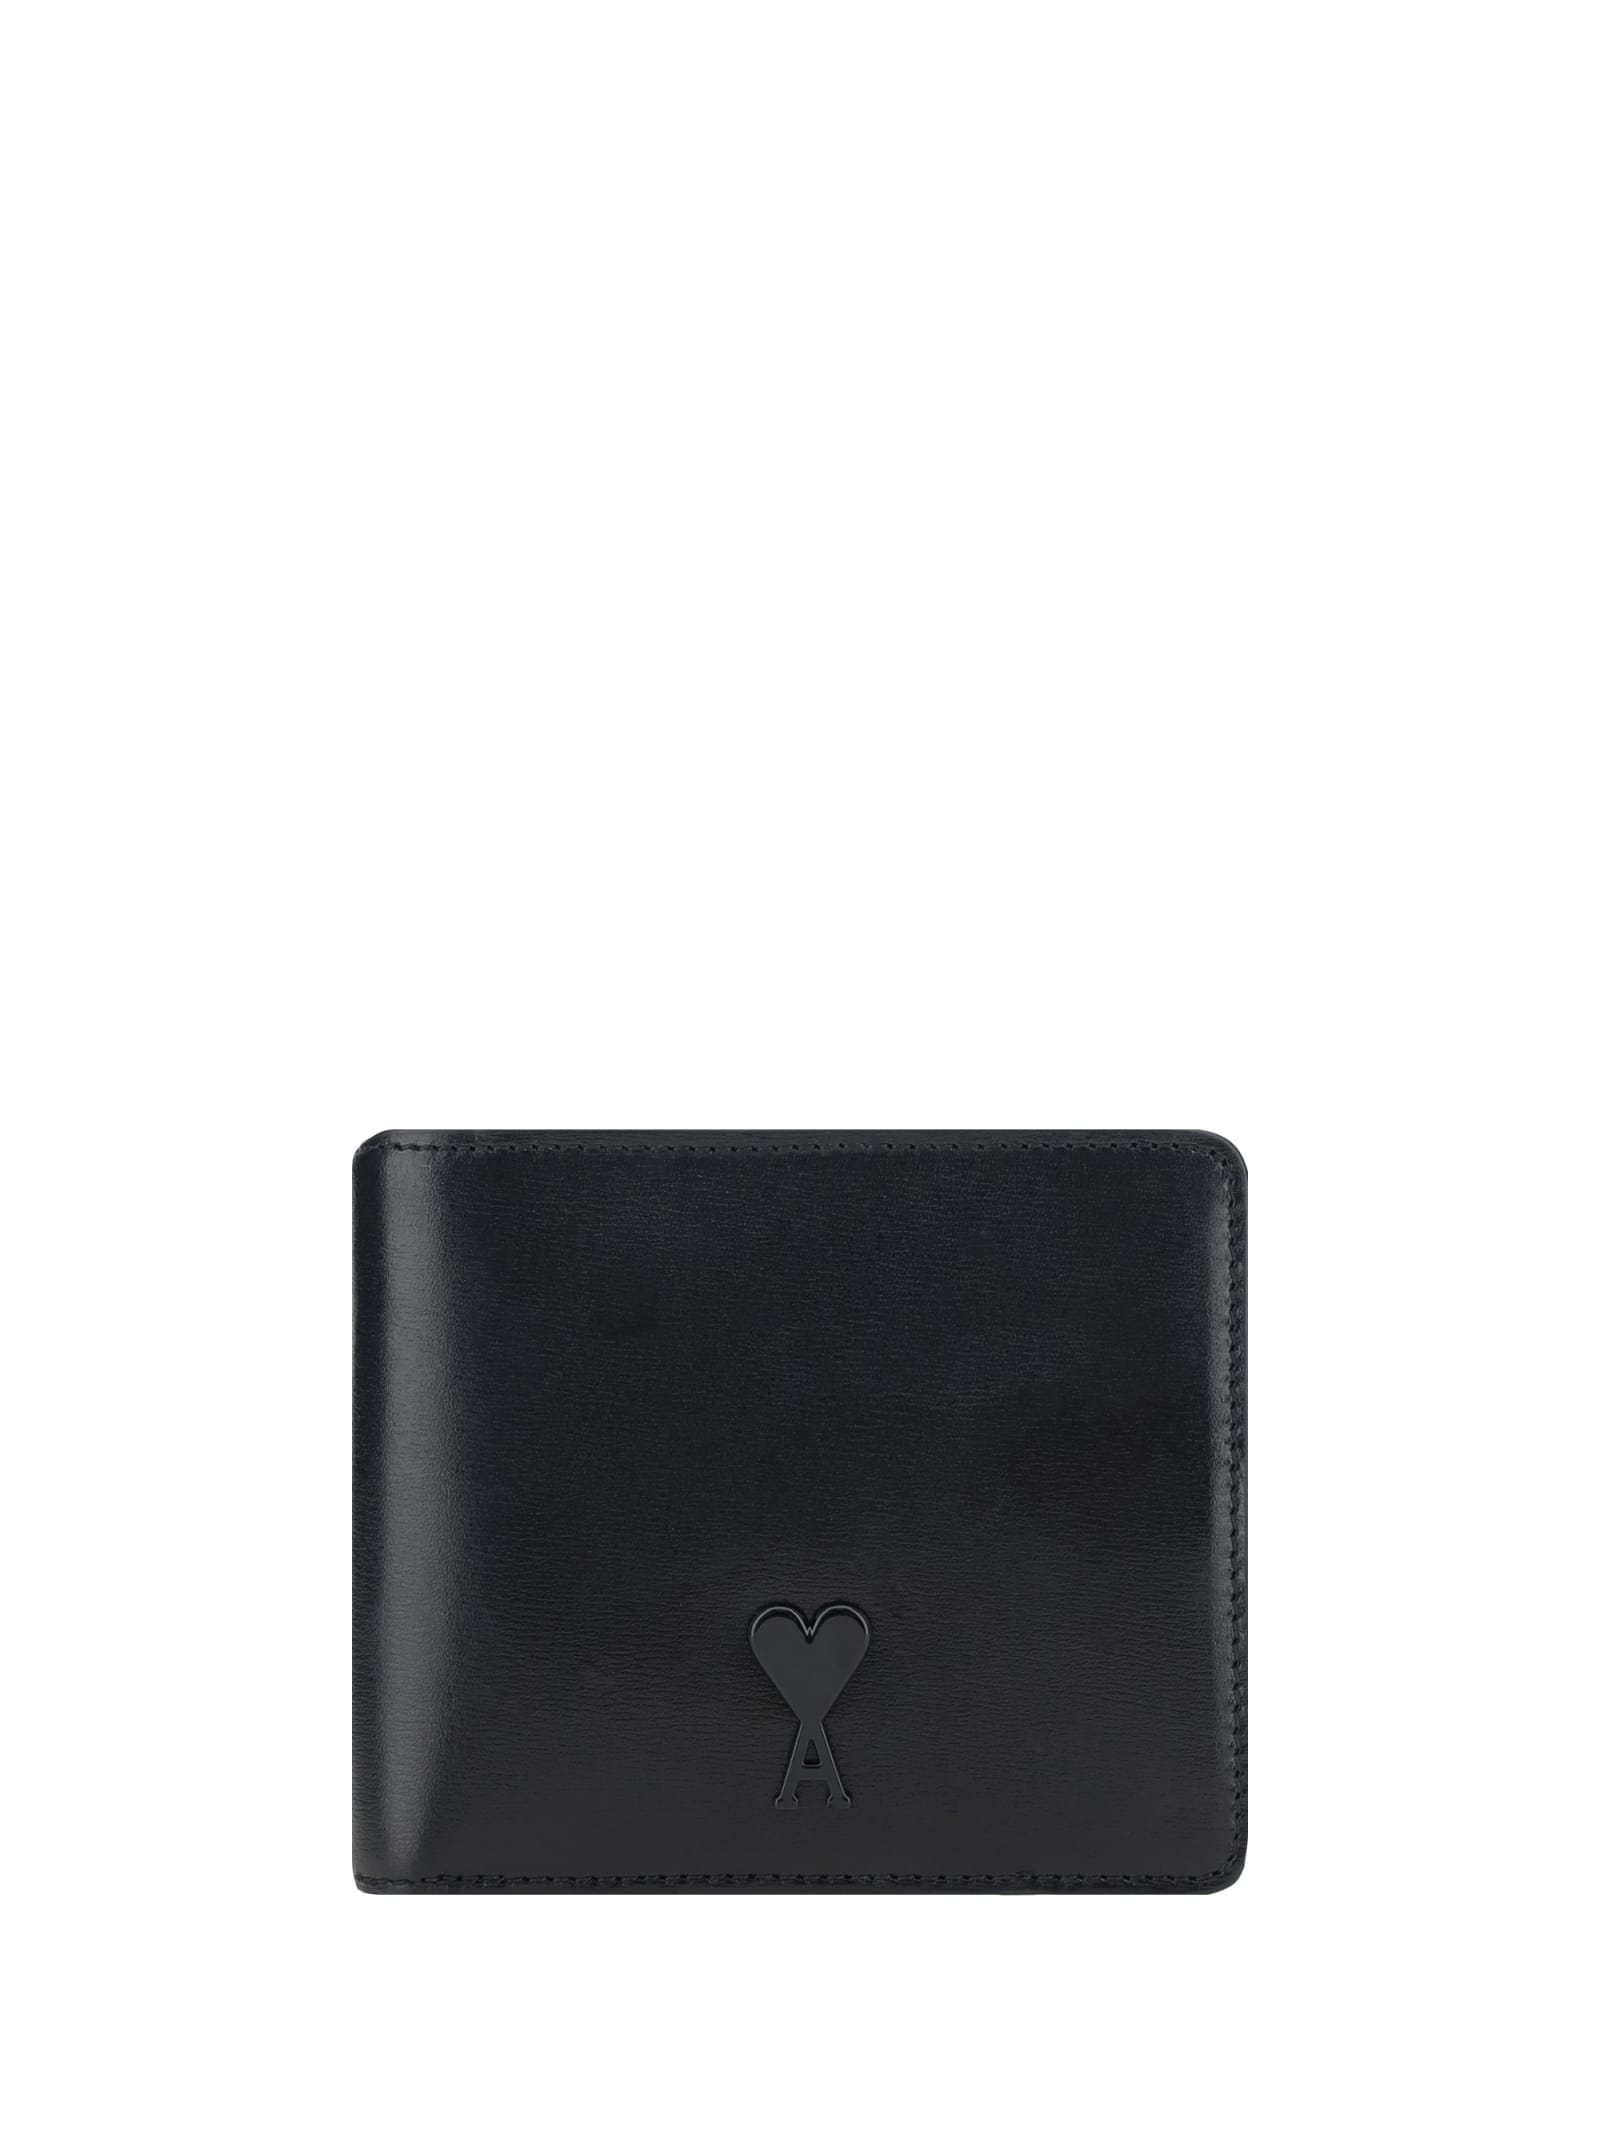 Ami Alexandre Mattiussi Wallet In Black